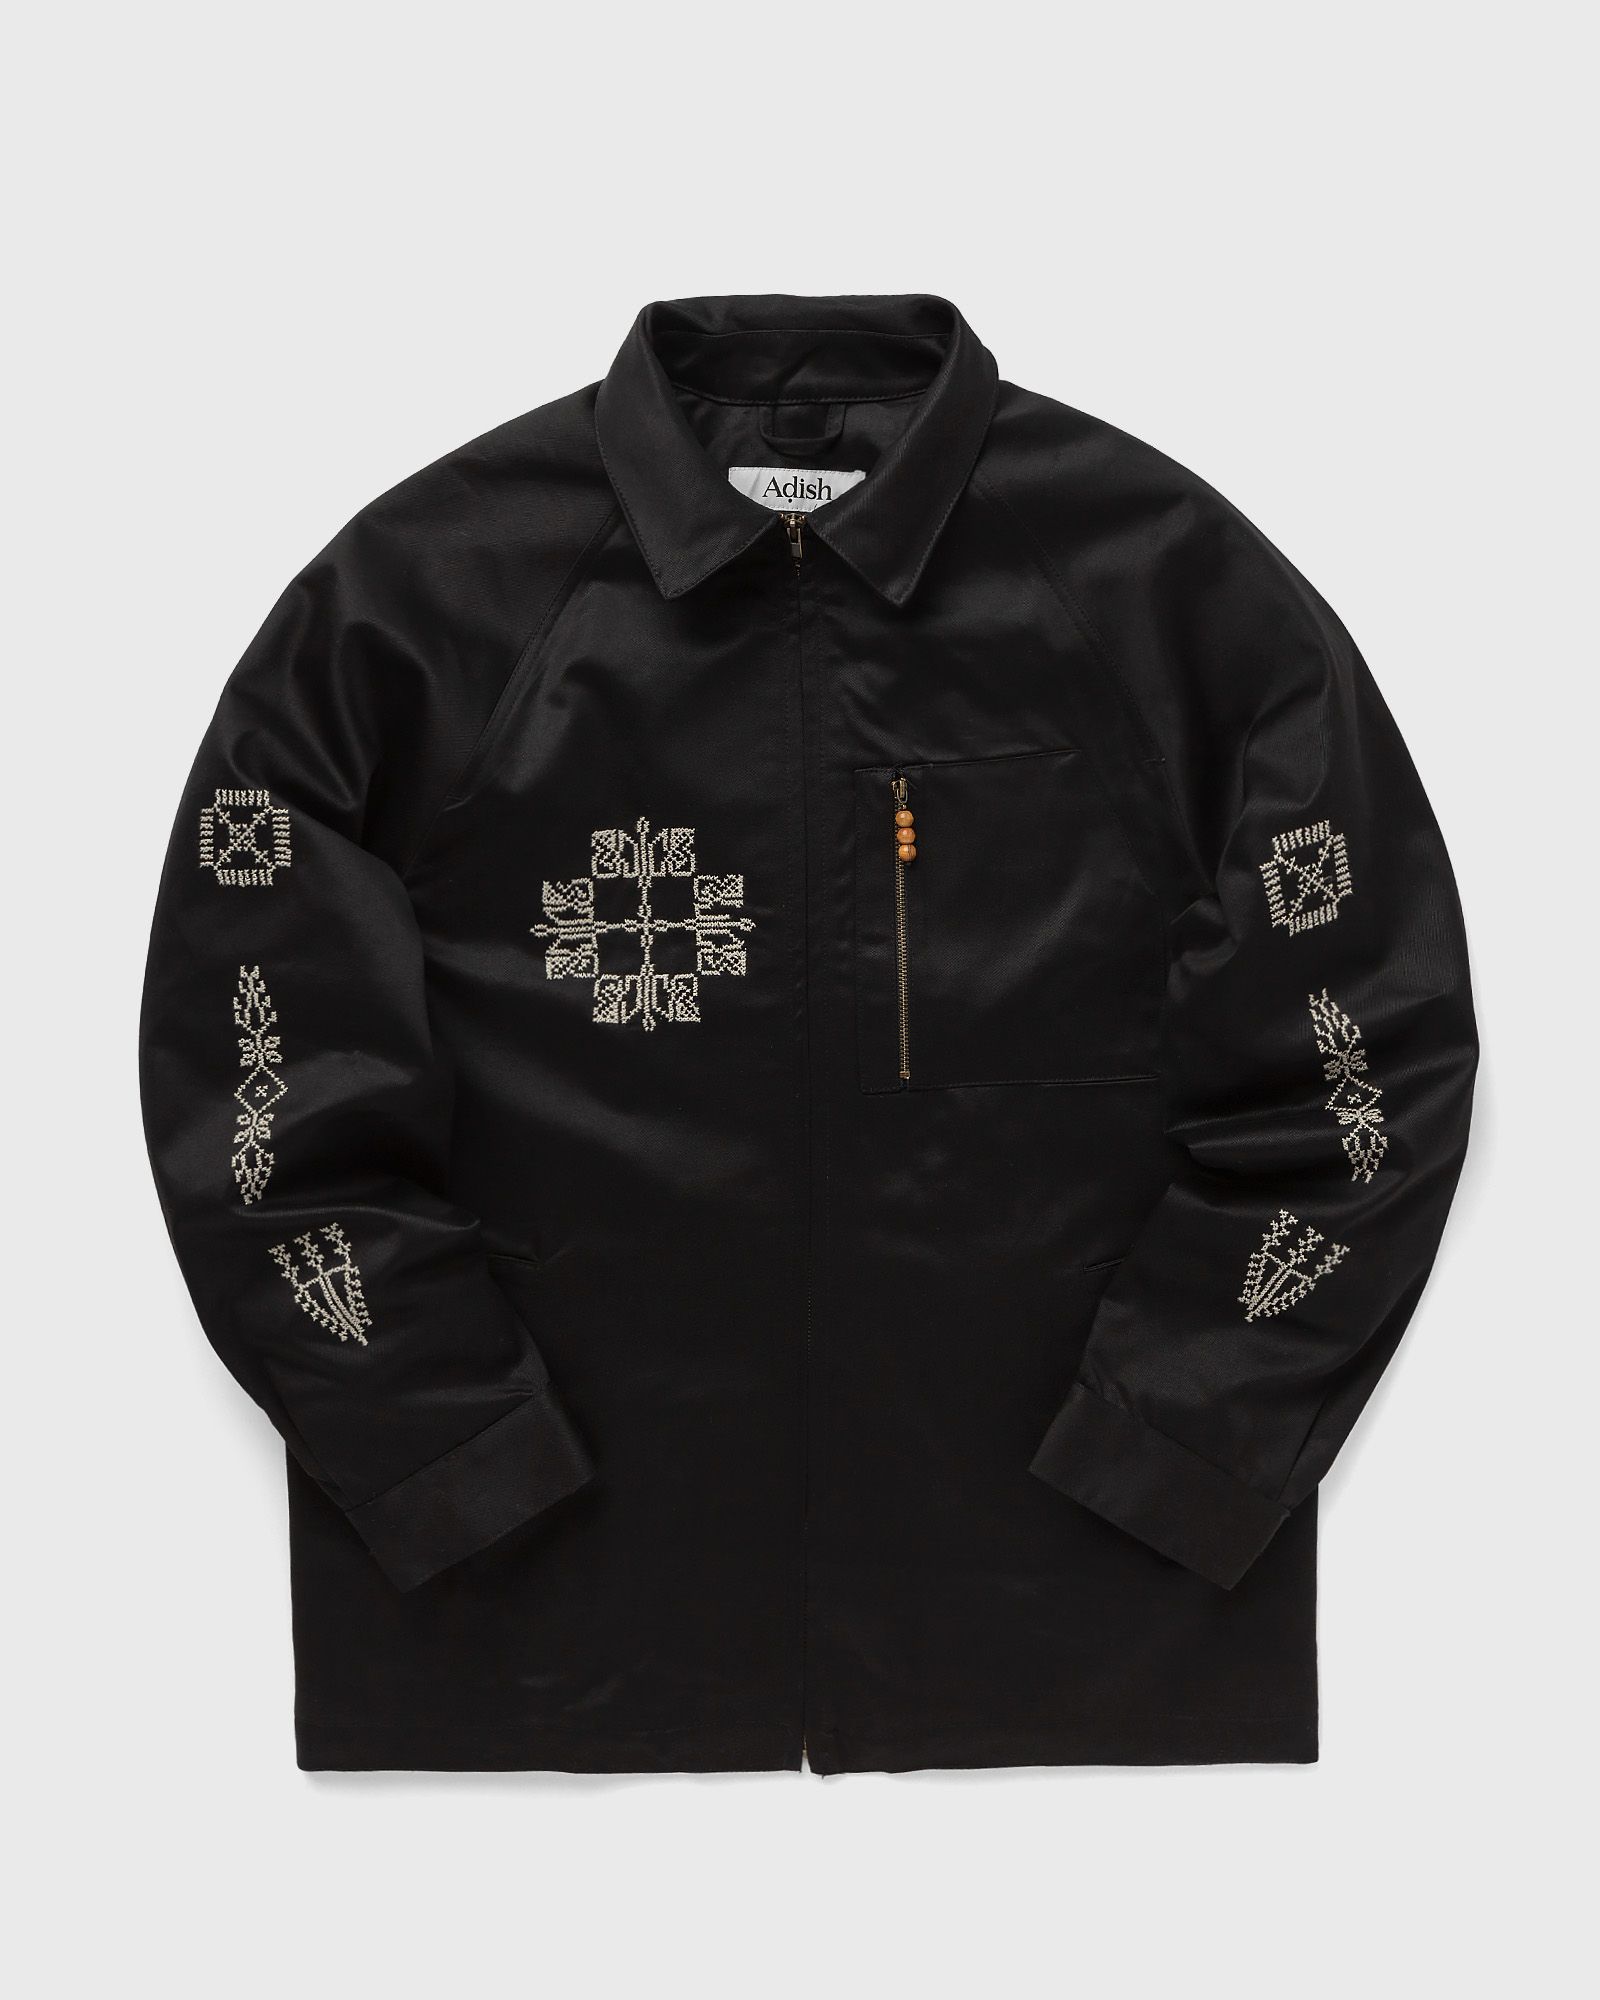 ADISH - raglan cotton makhlut jacket men overshirts black in größe:l